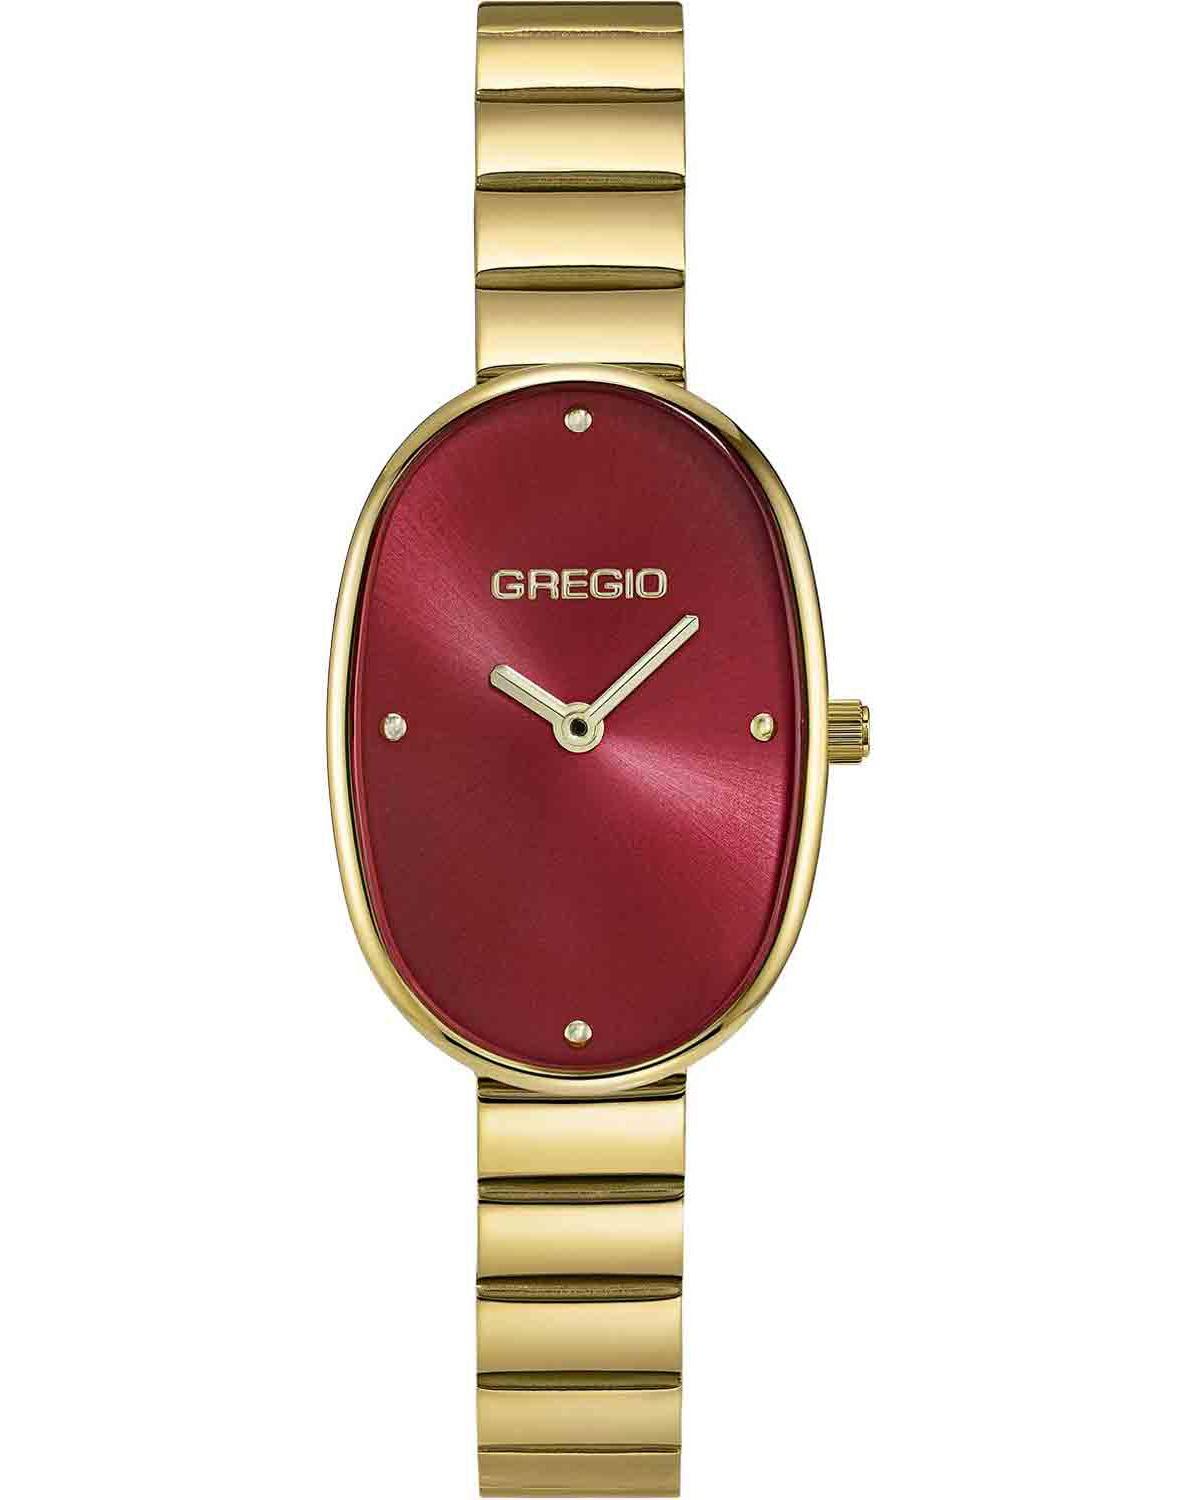 GREGIO Aveline - GR380072, Gold case with Stainless Steel Bracelet